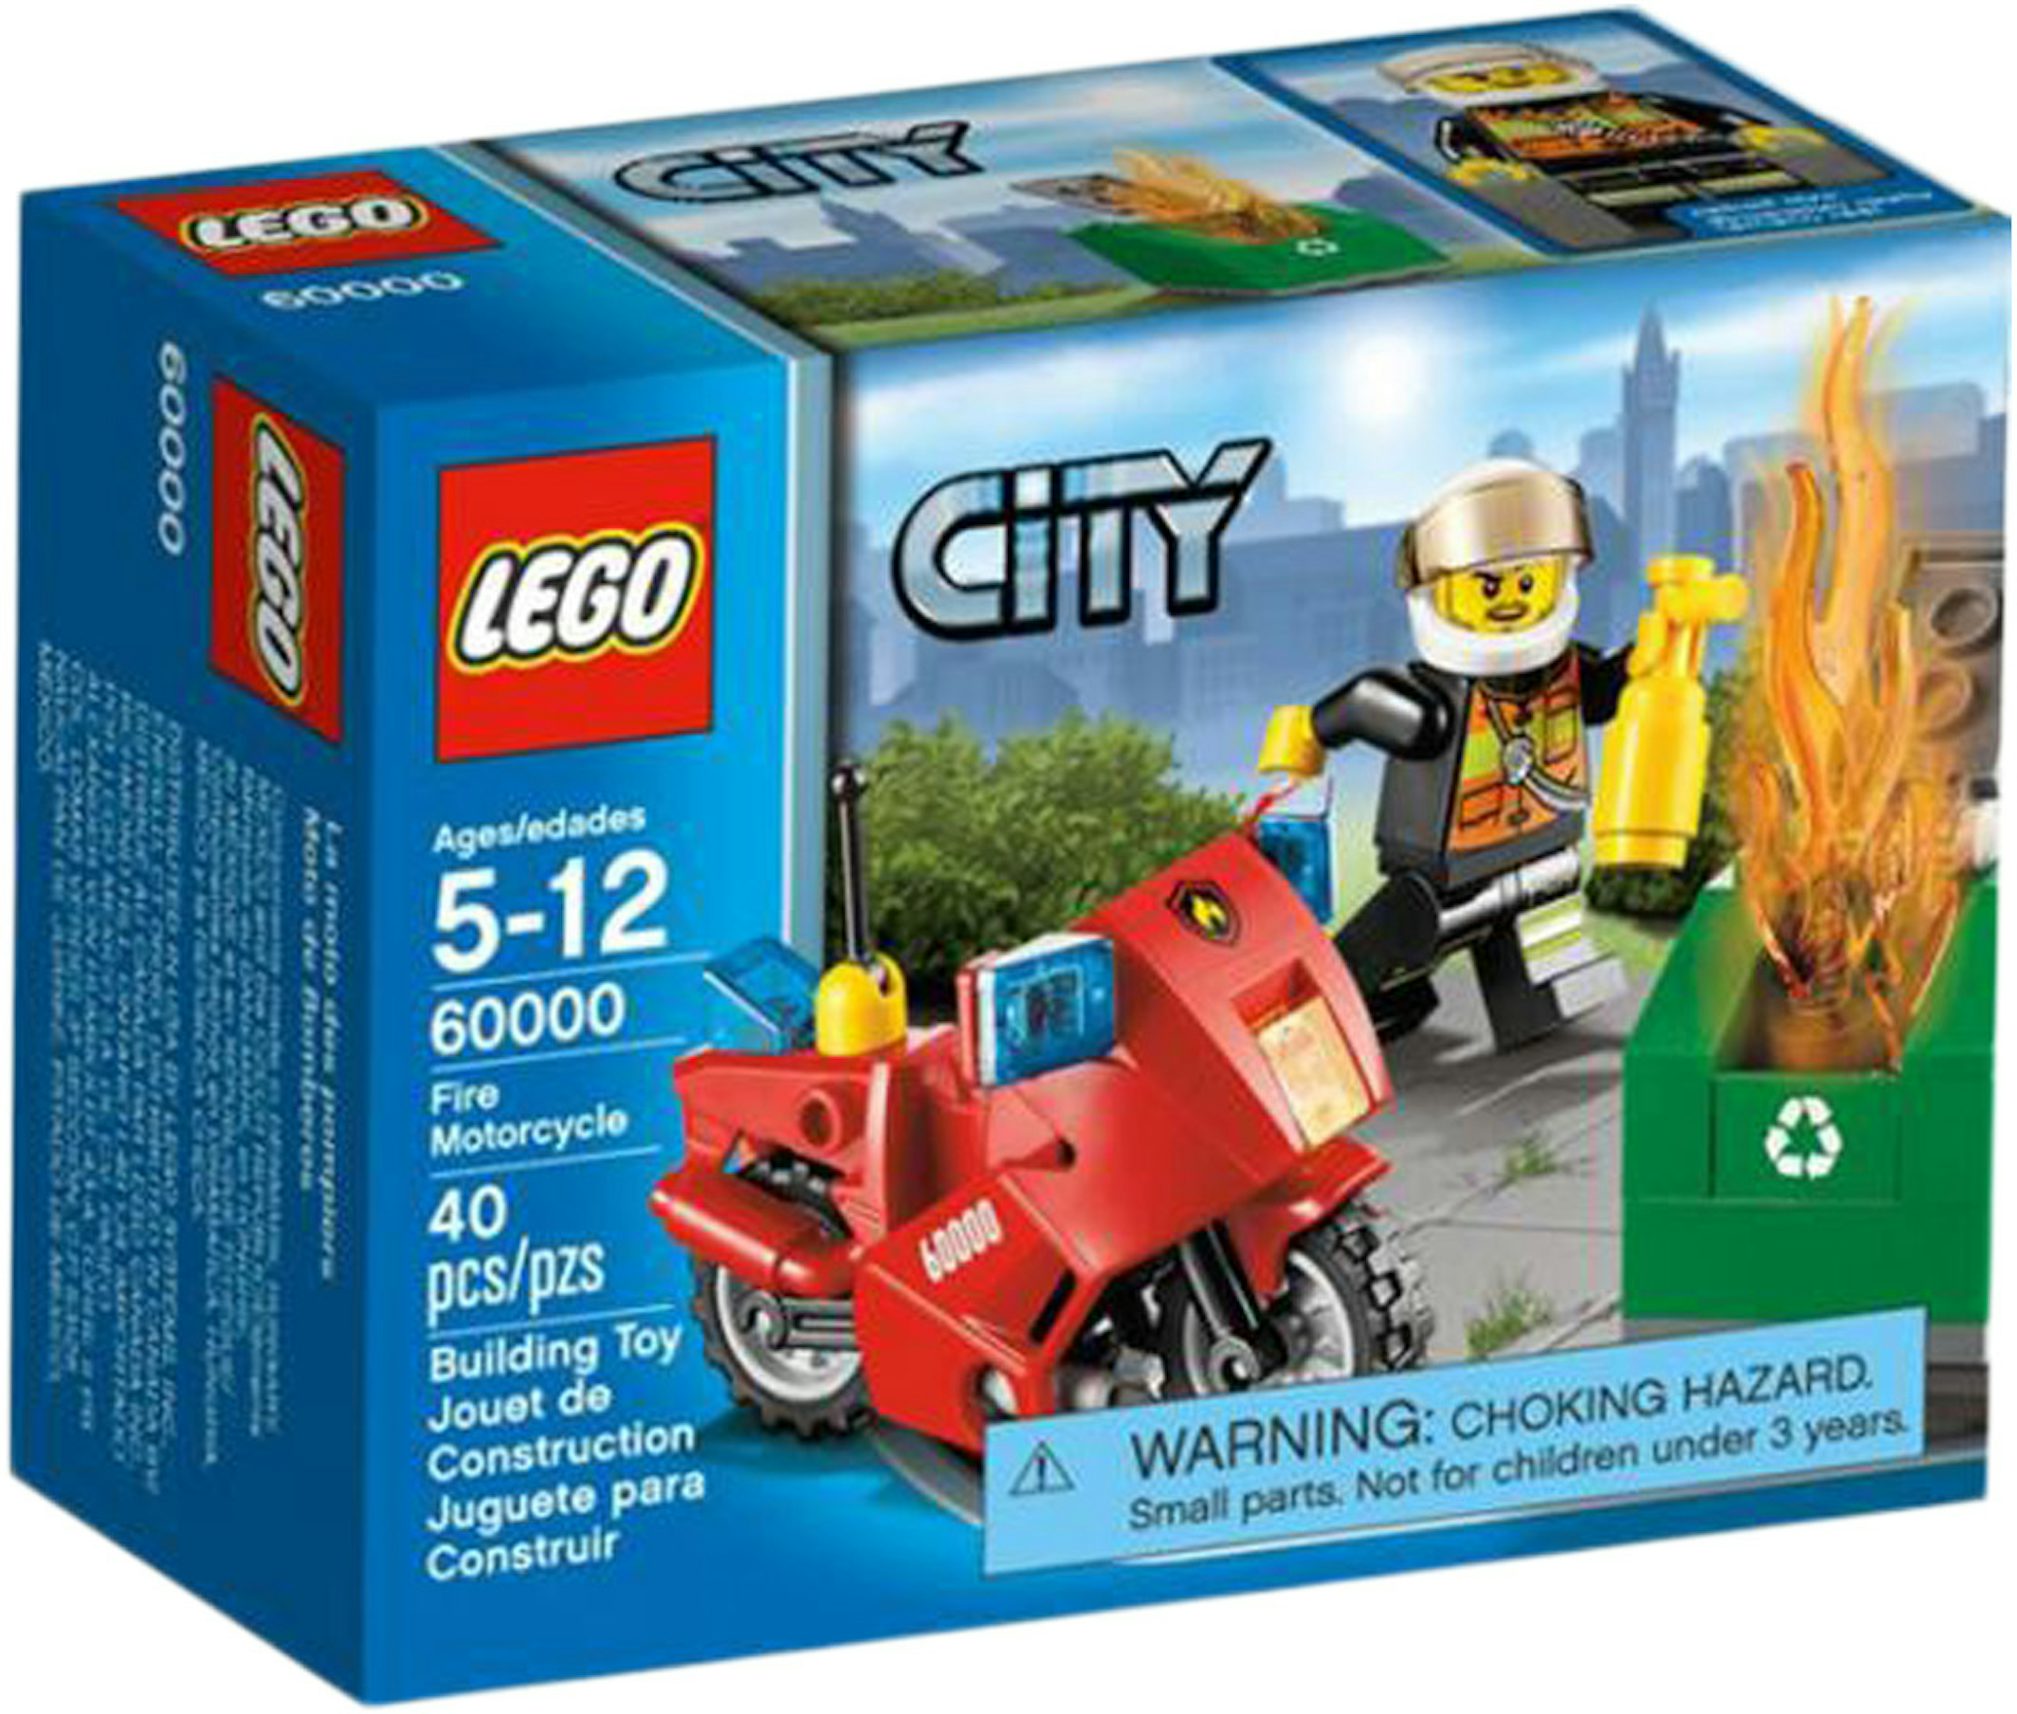 LEGO City Fire Motorcycle Set 60000 - US